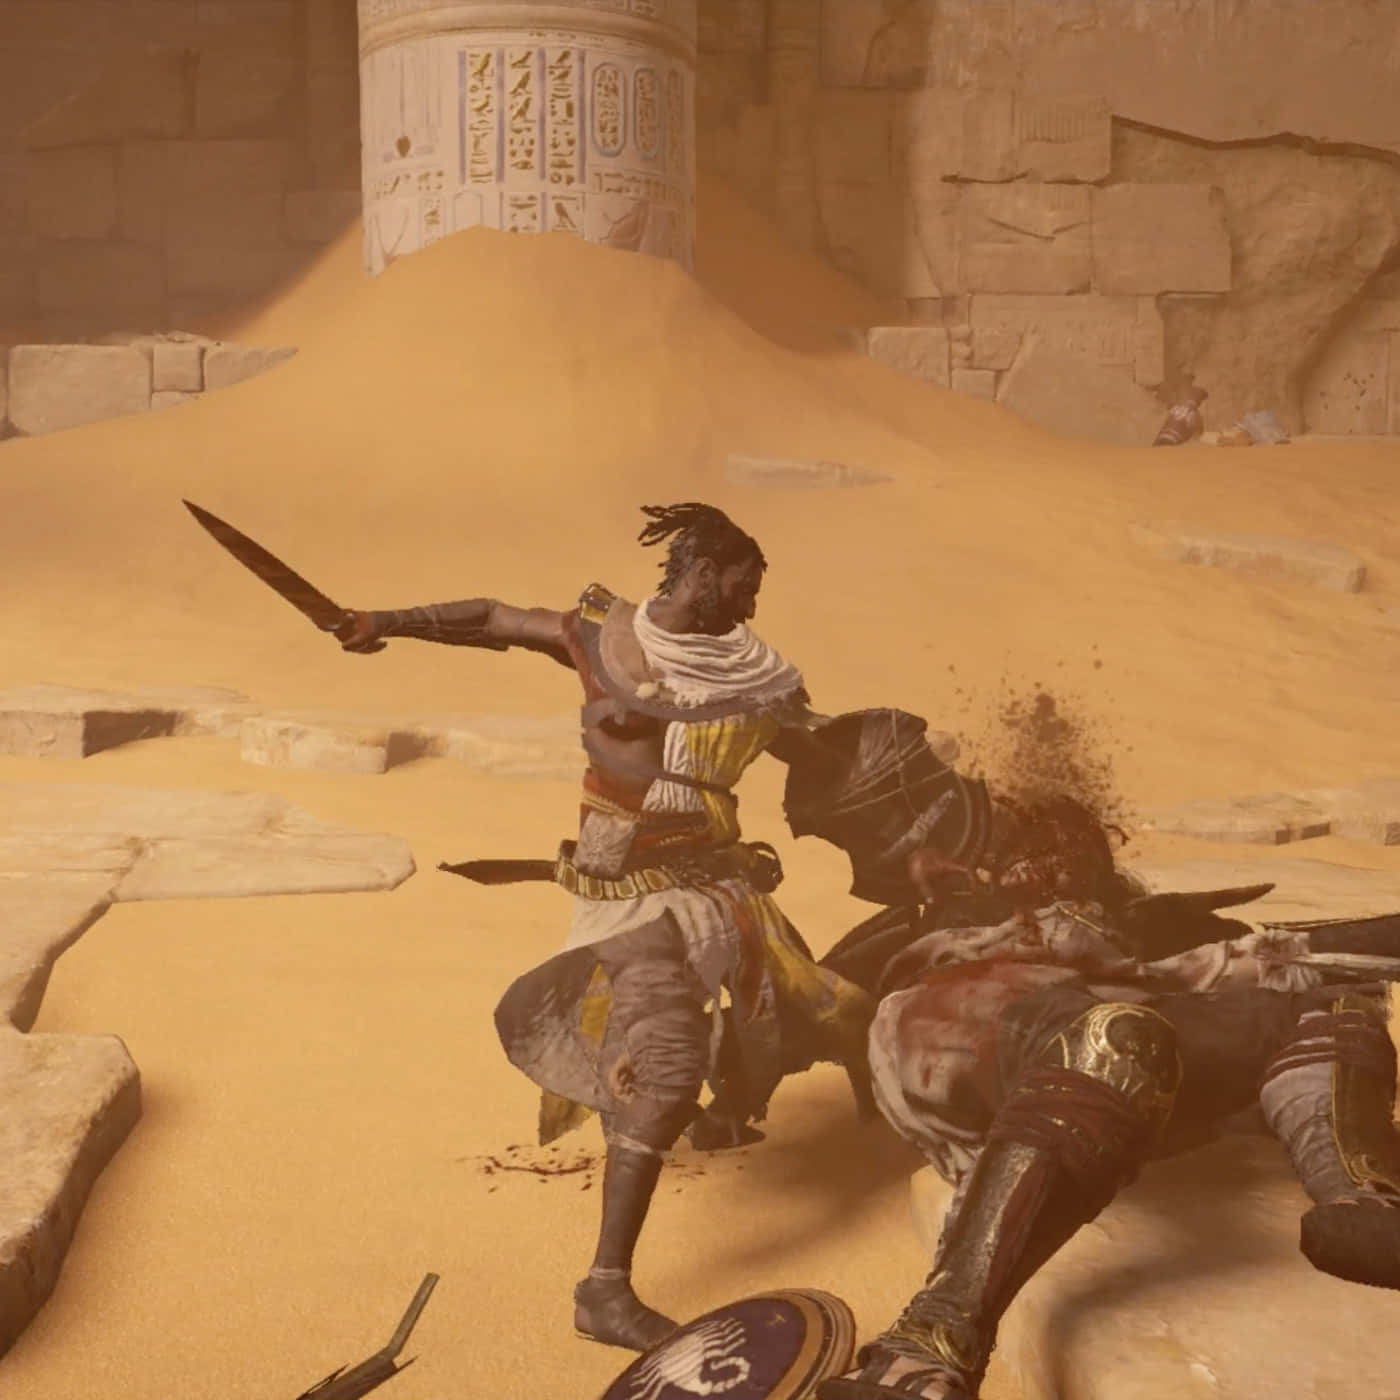 Esploral'ampio Paesaggio Dell'antico Egitto In 'assassin's Creed Origins'